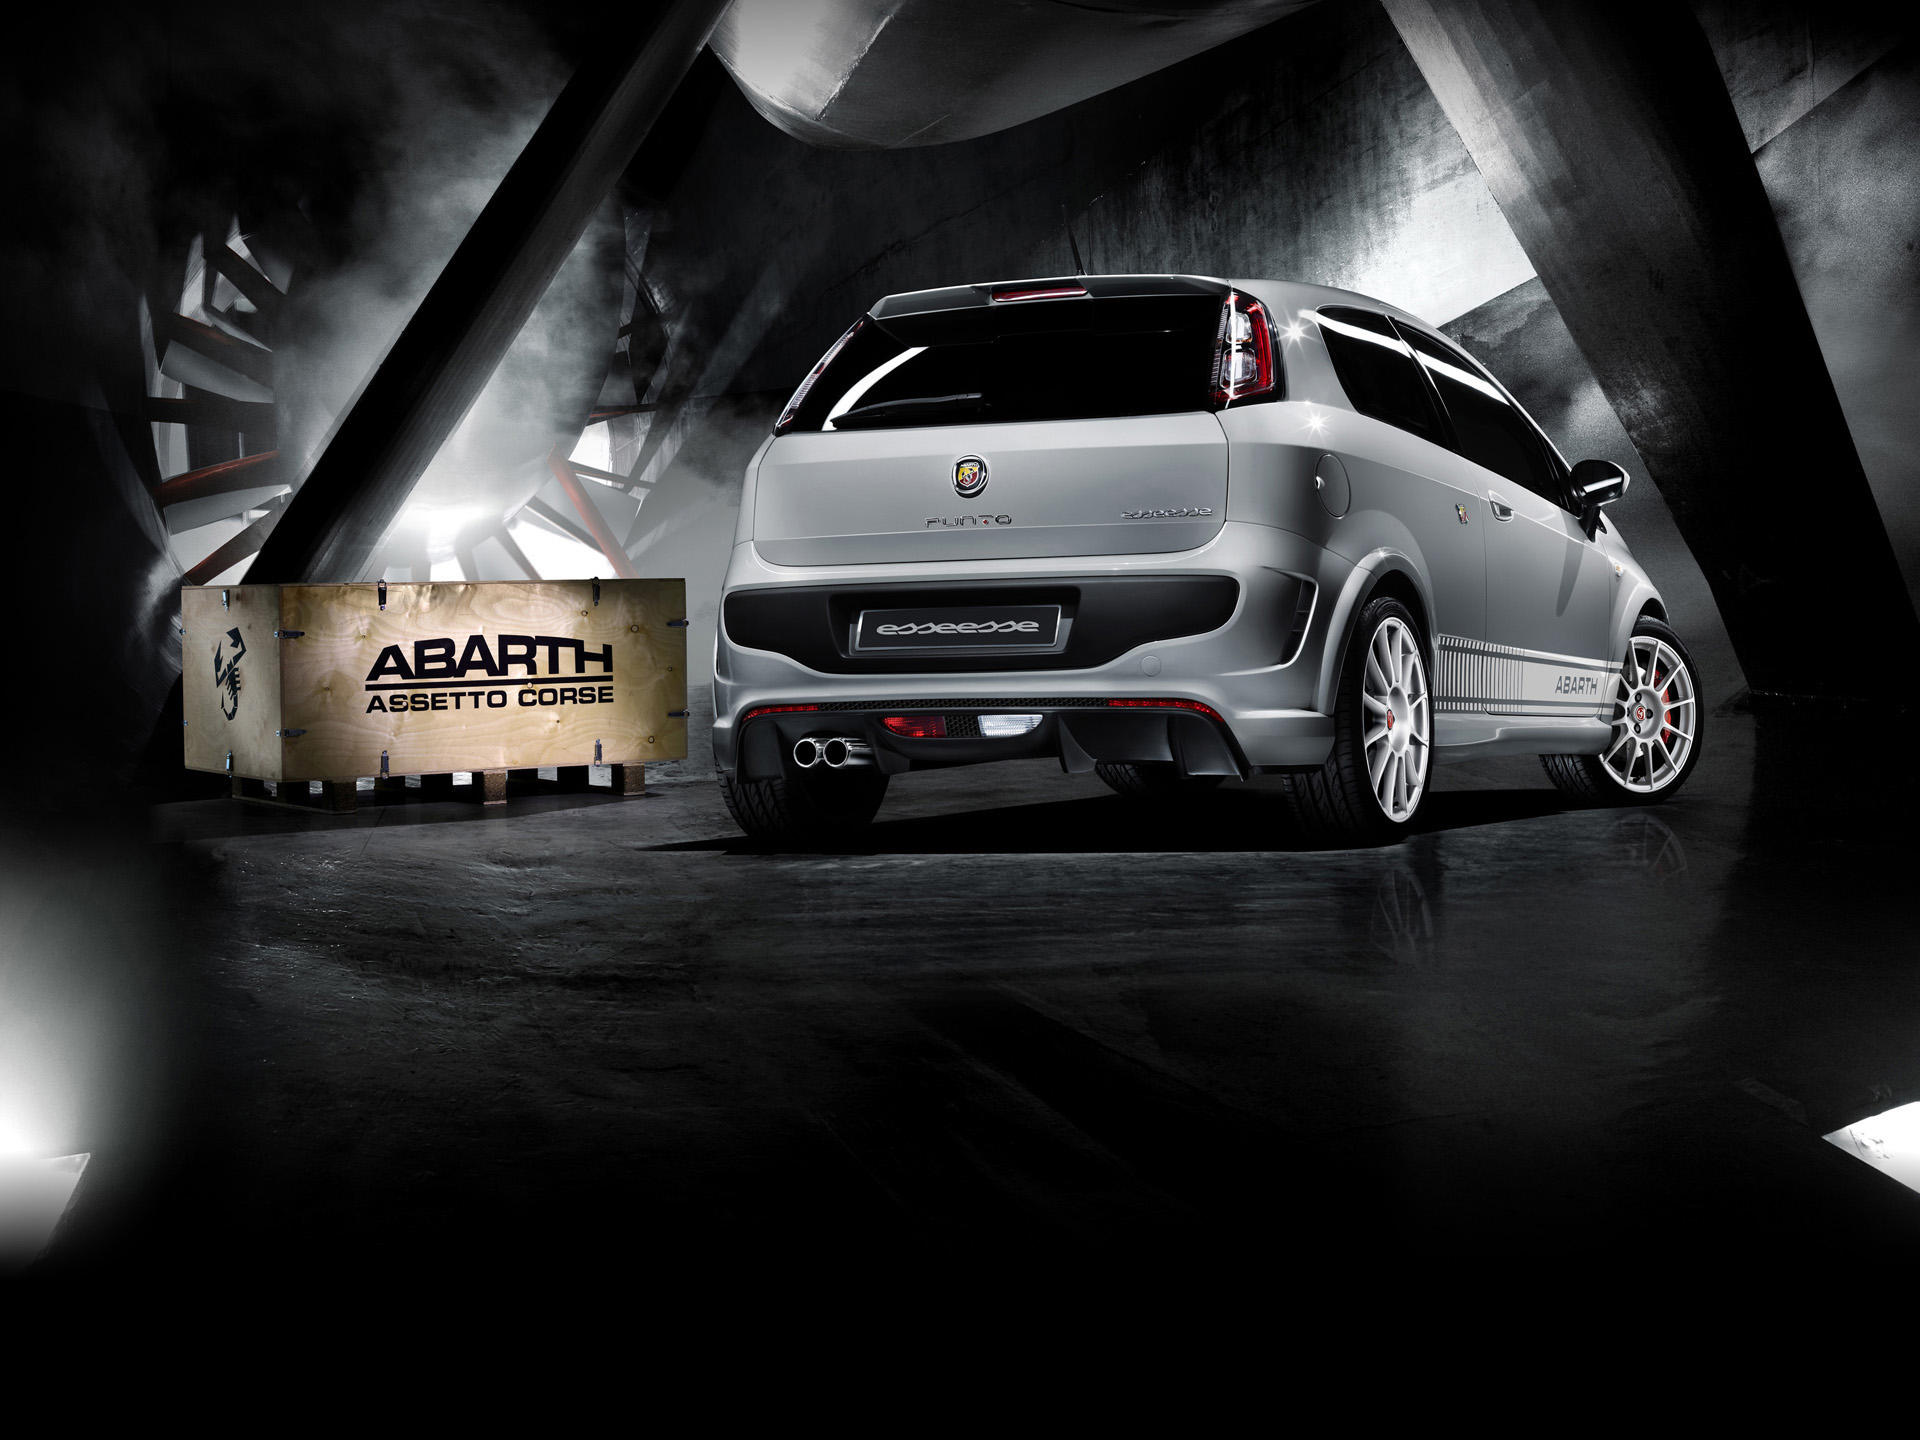  2011 Fiat Abarth Punto Evo Esseesse Wallpaper.